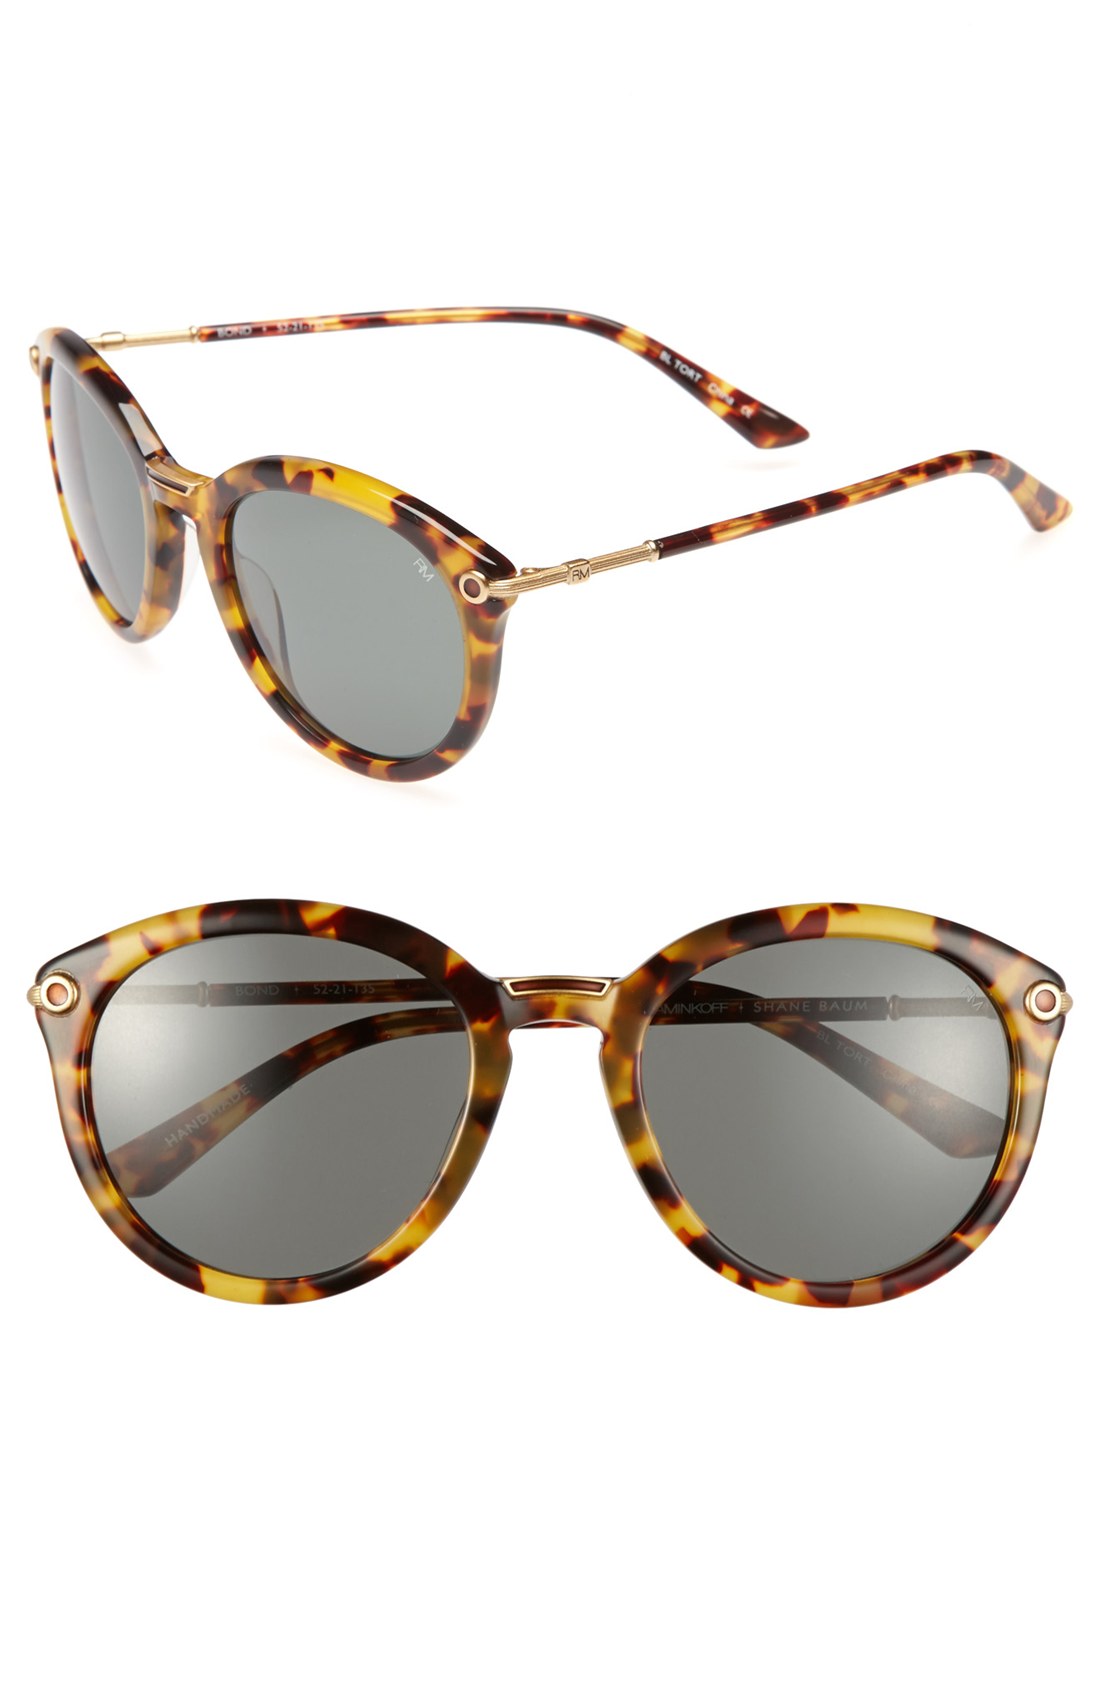 Rebecca Minkoff Bond 52mm Sunglasses in Brown (Blond Tortoise Gold) | Lyst